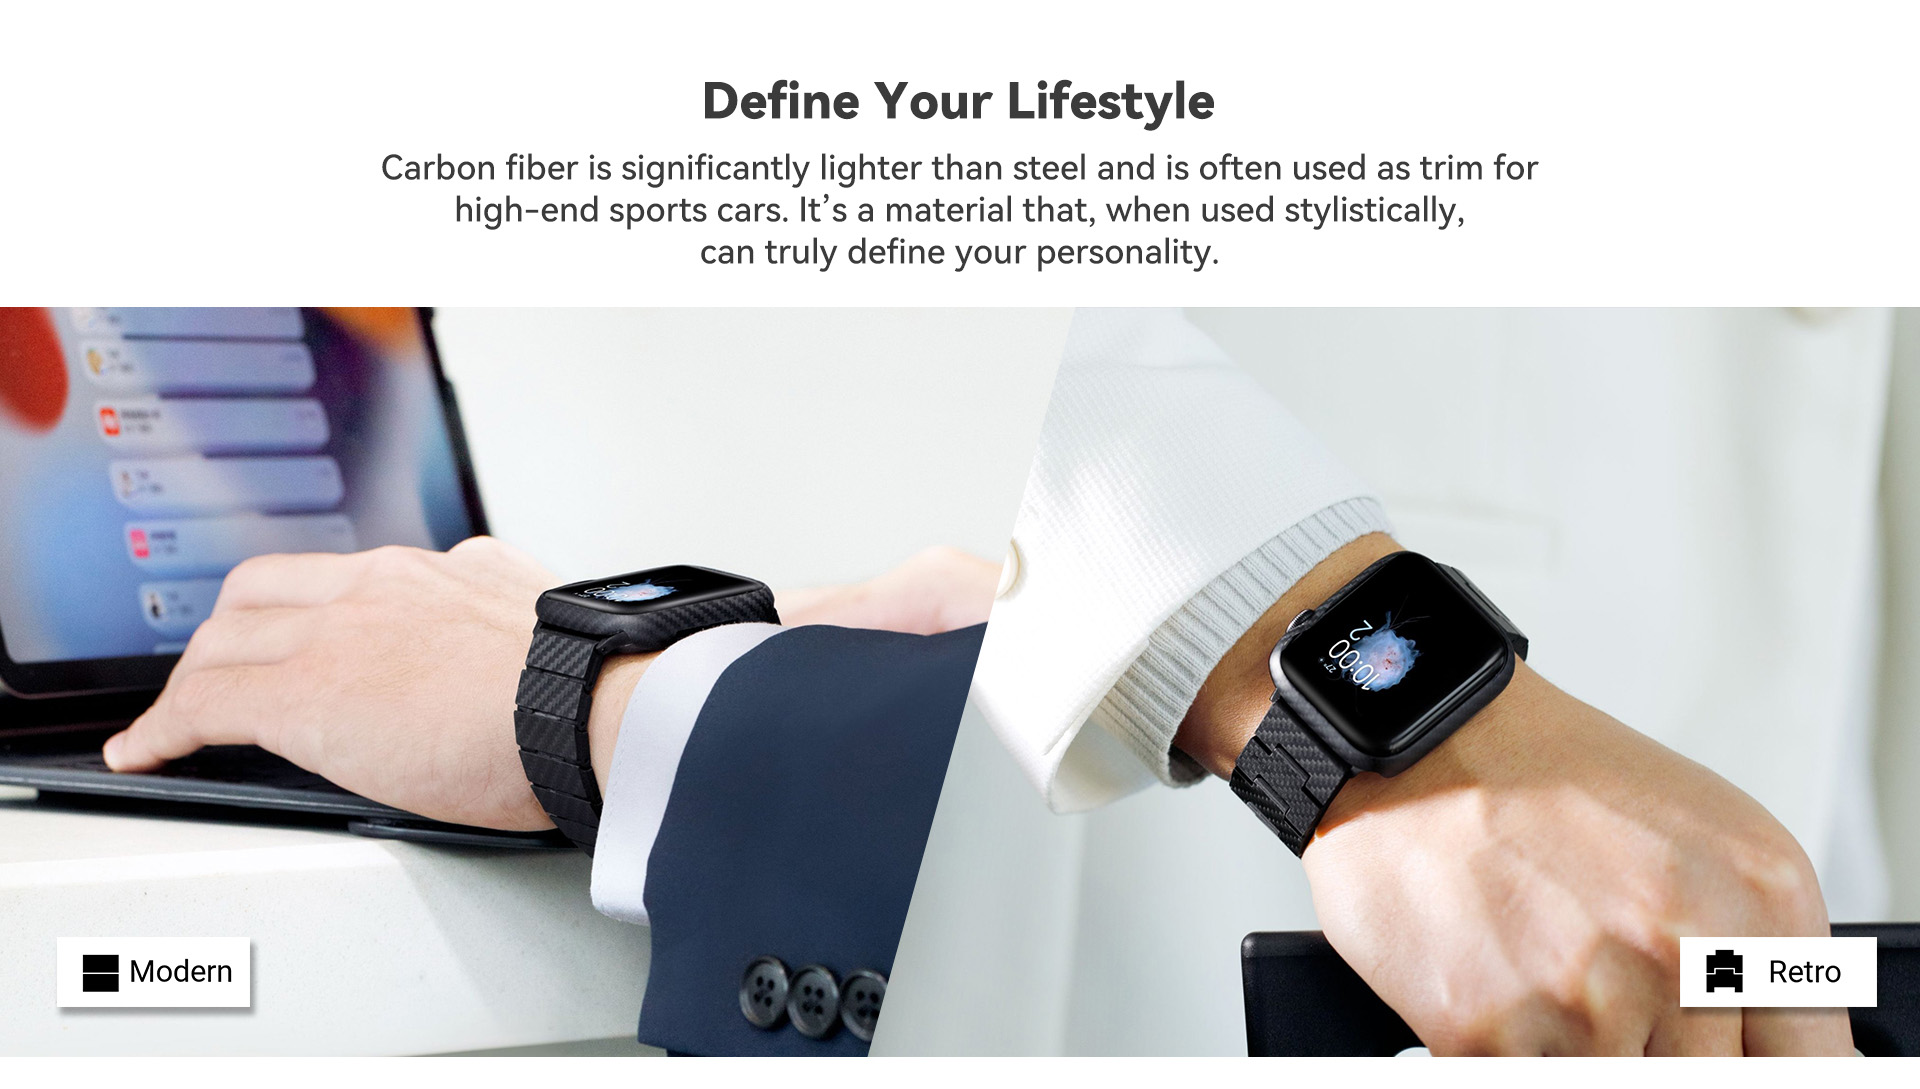 PITAKA Carbon Fiber Watch Band for Apple Watch - Obuy USA